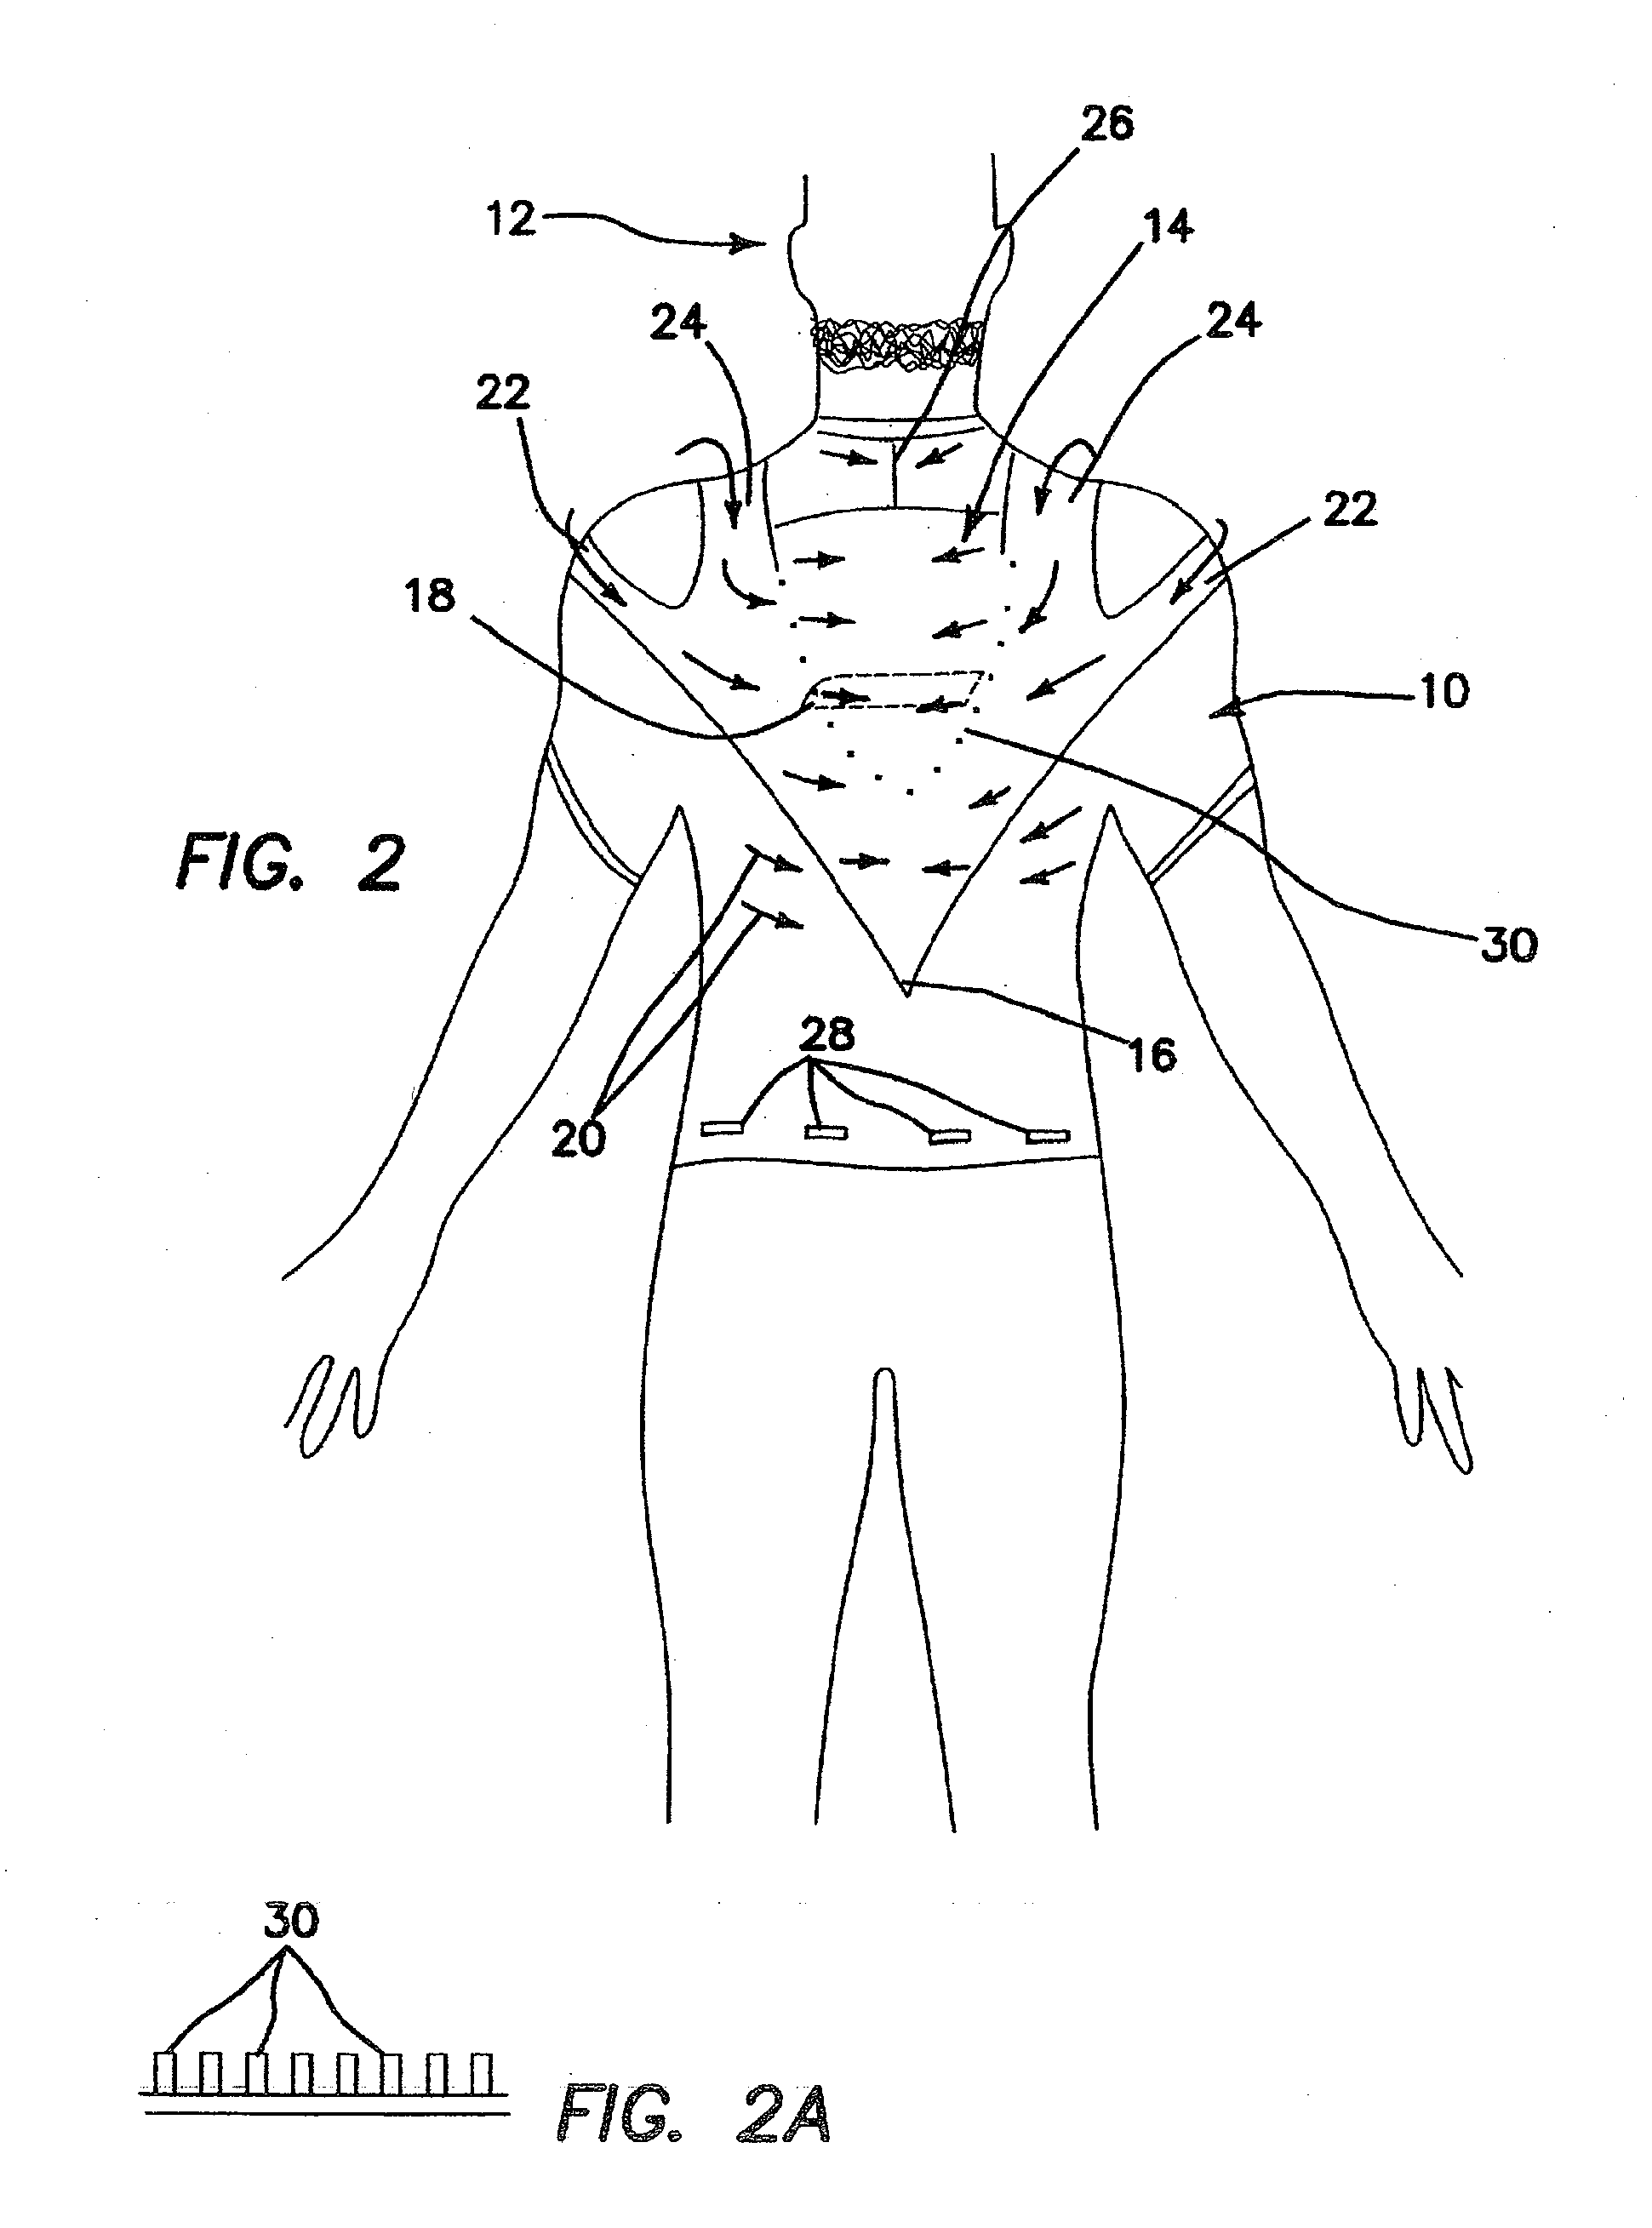 Sensory motor stimulation garment and method